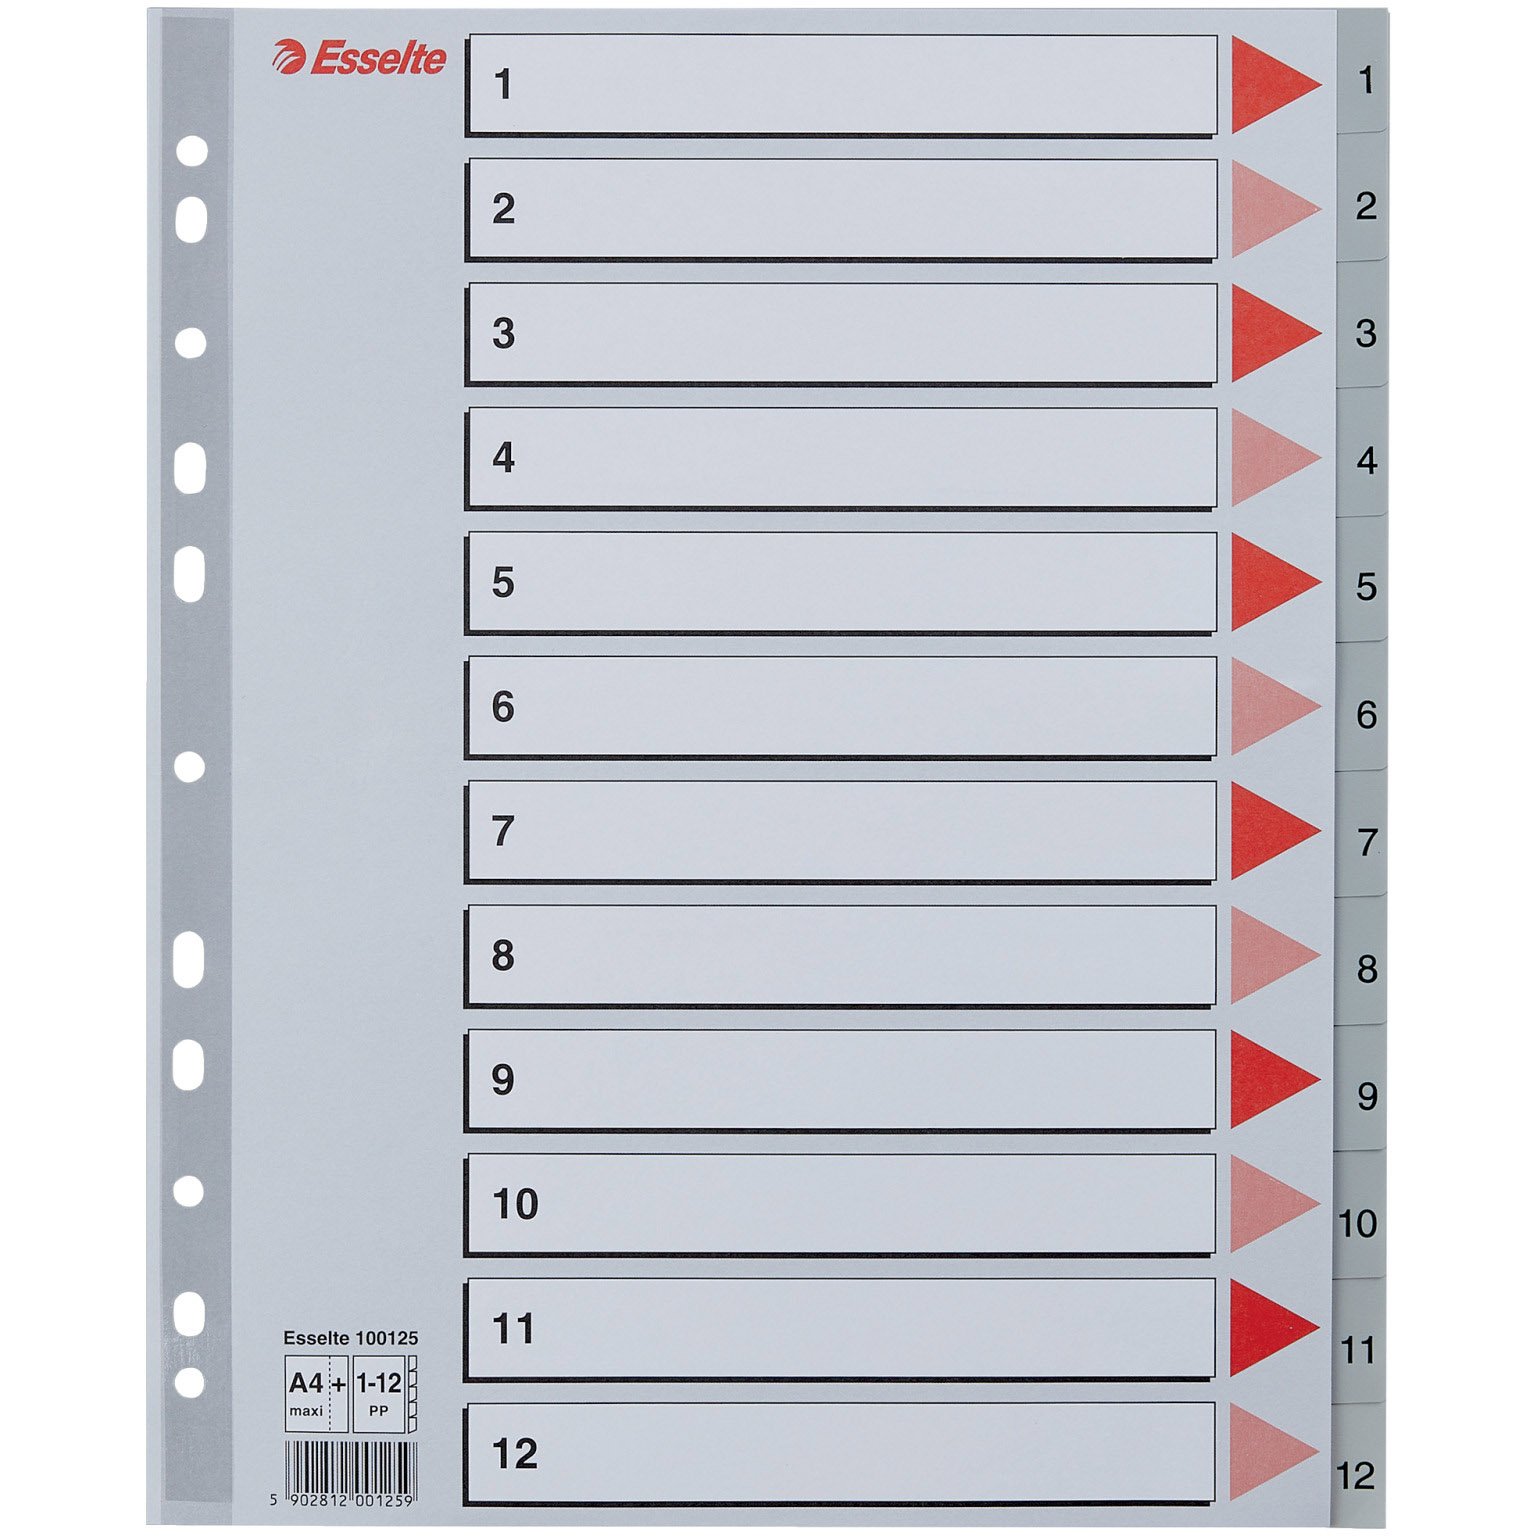 Esselte MAXI register A4+ med 12 tabs i farven grå